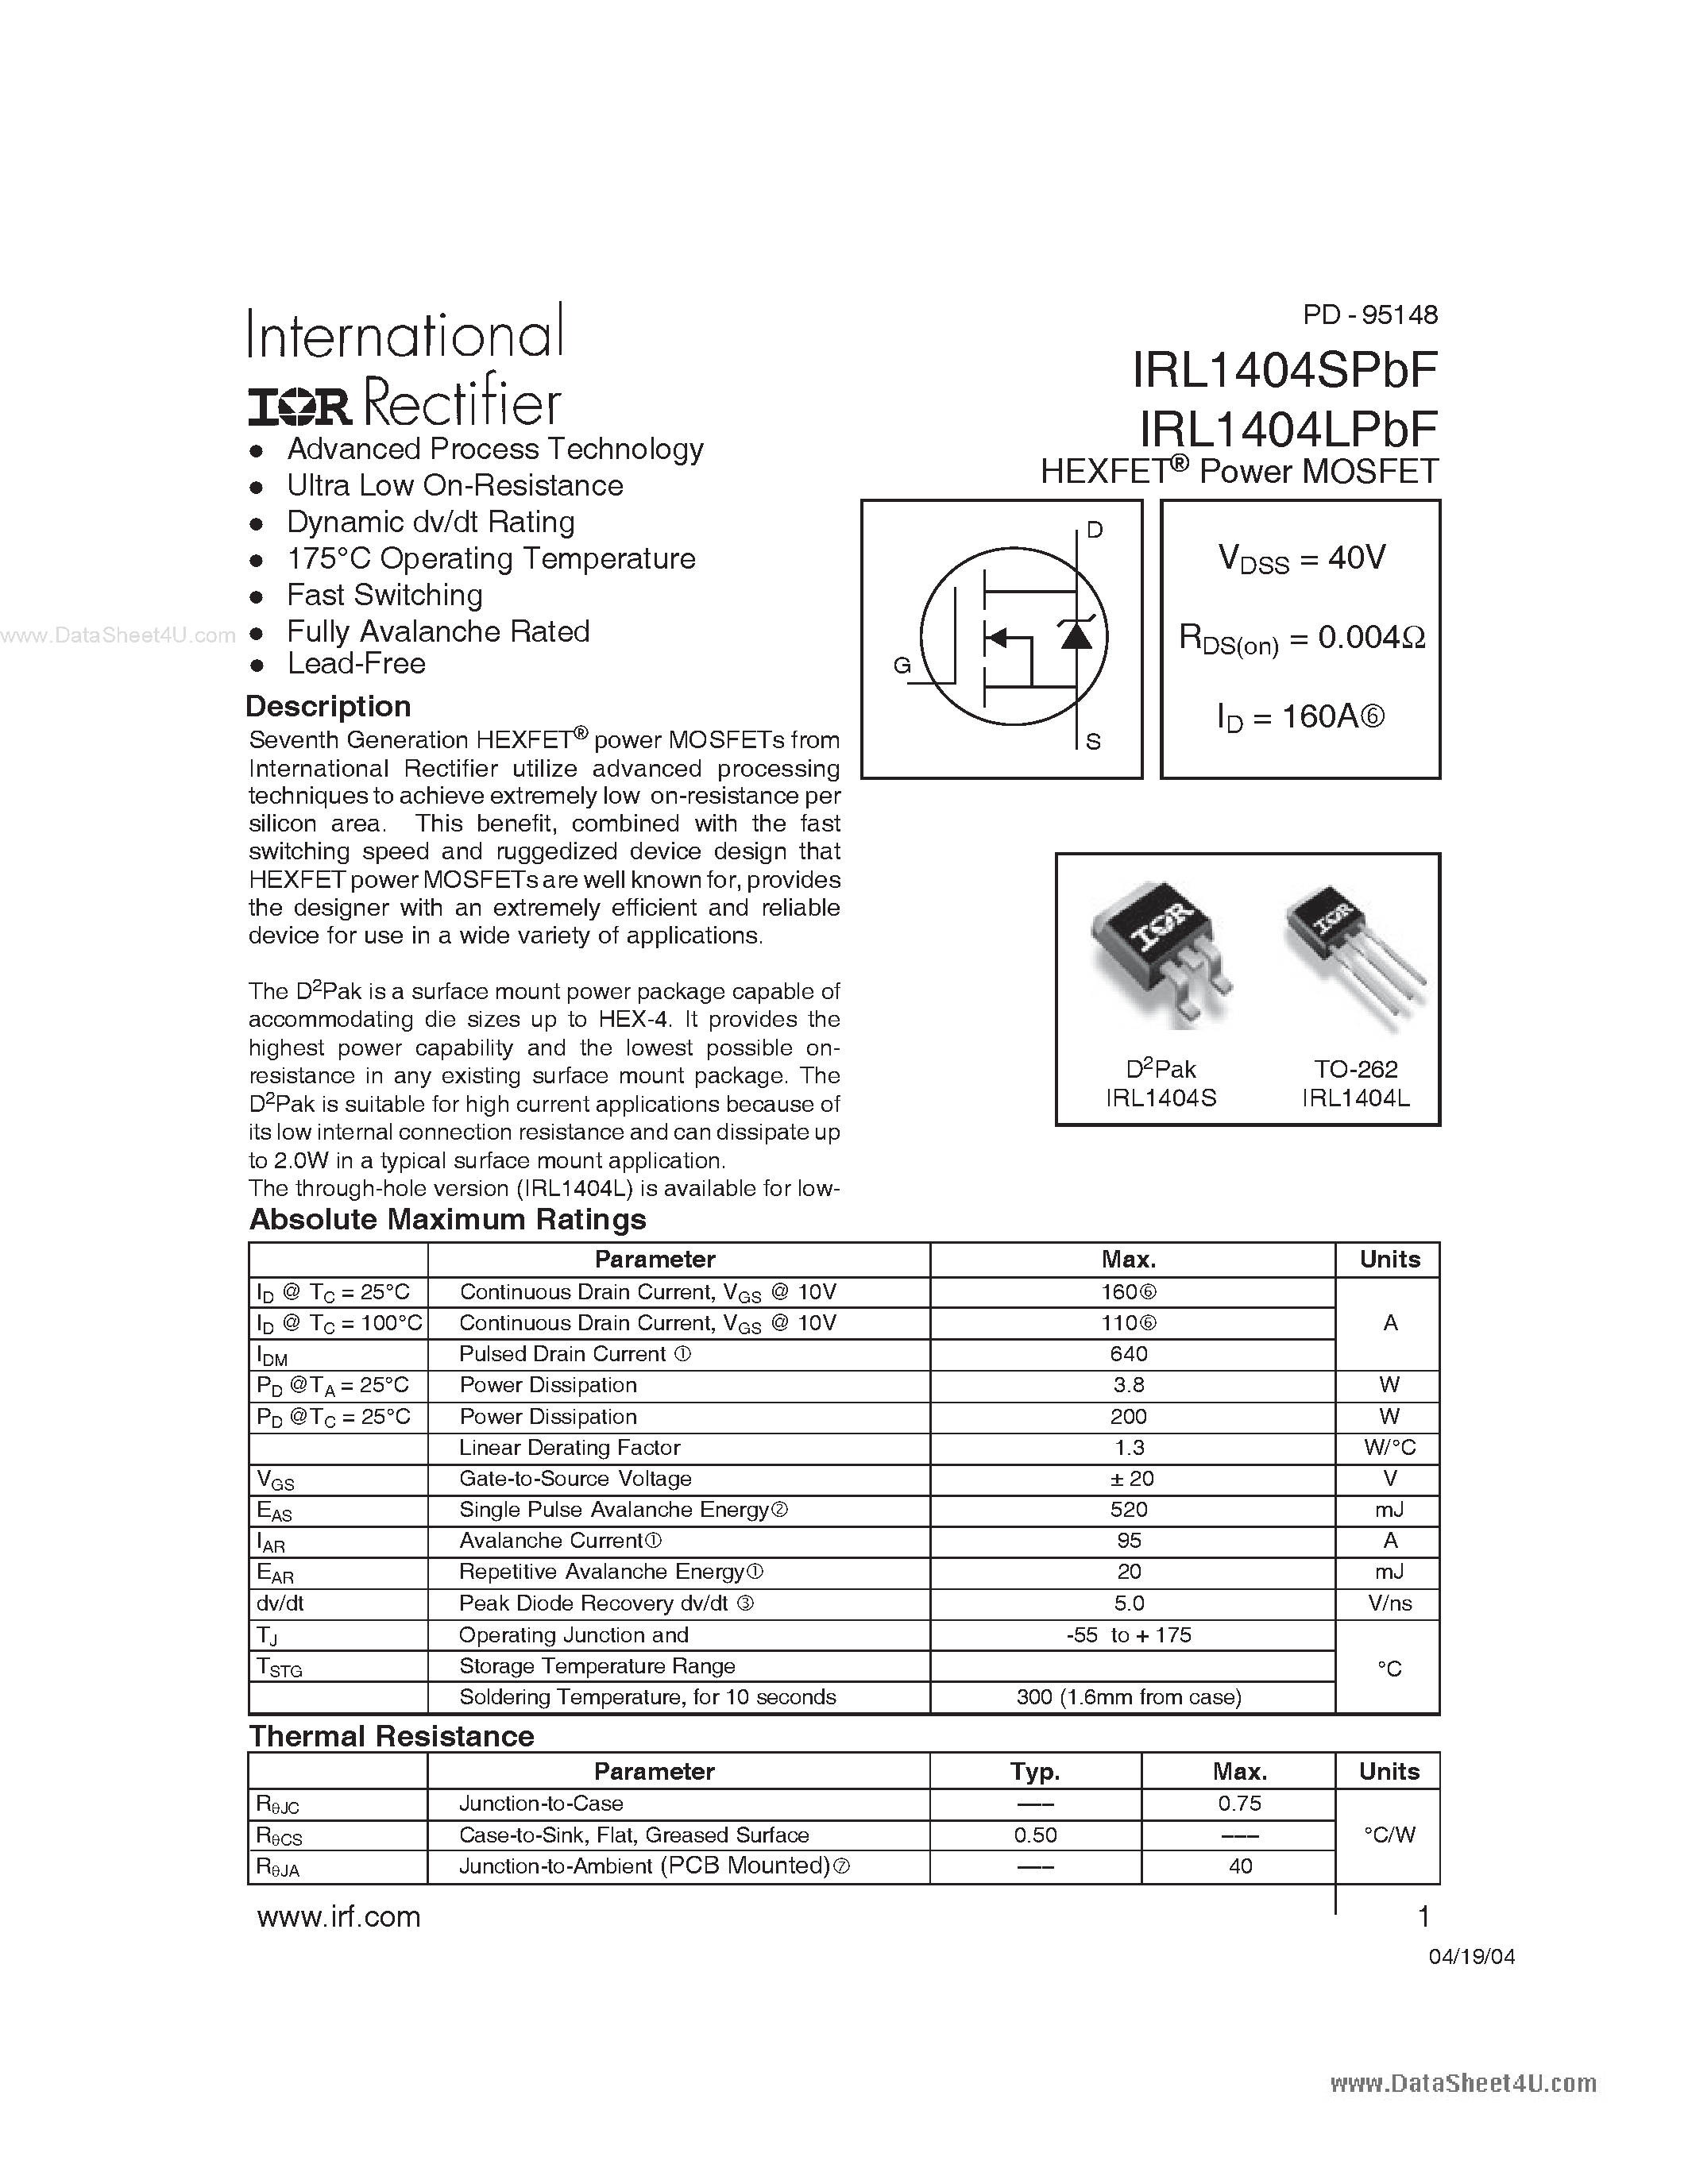 Даташит IRL1404LPBF - Power MOSFET страница 1